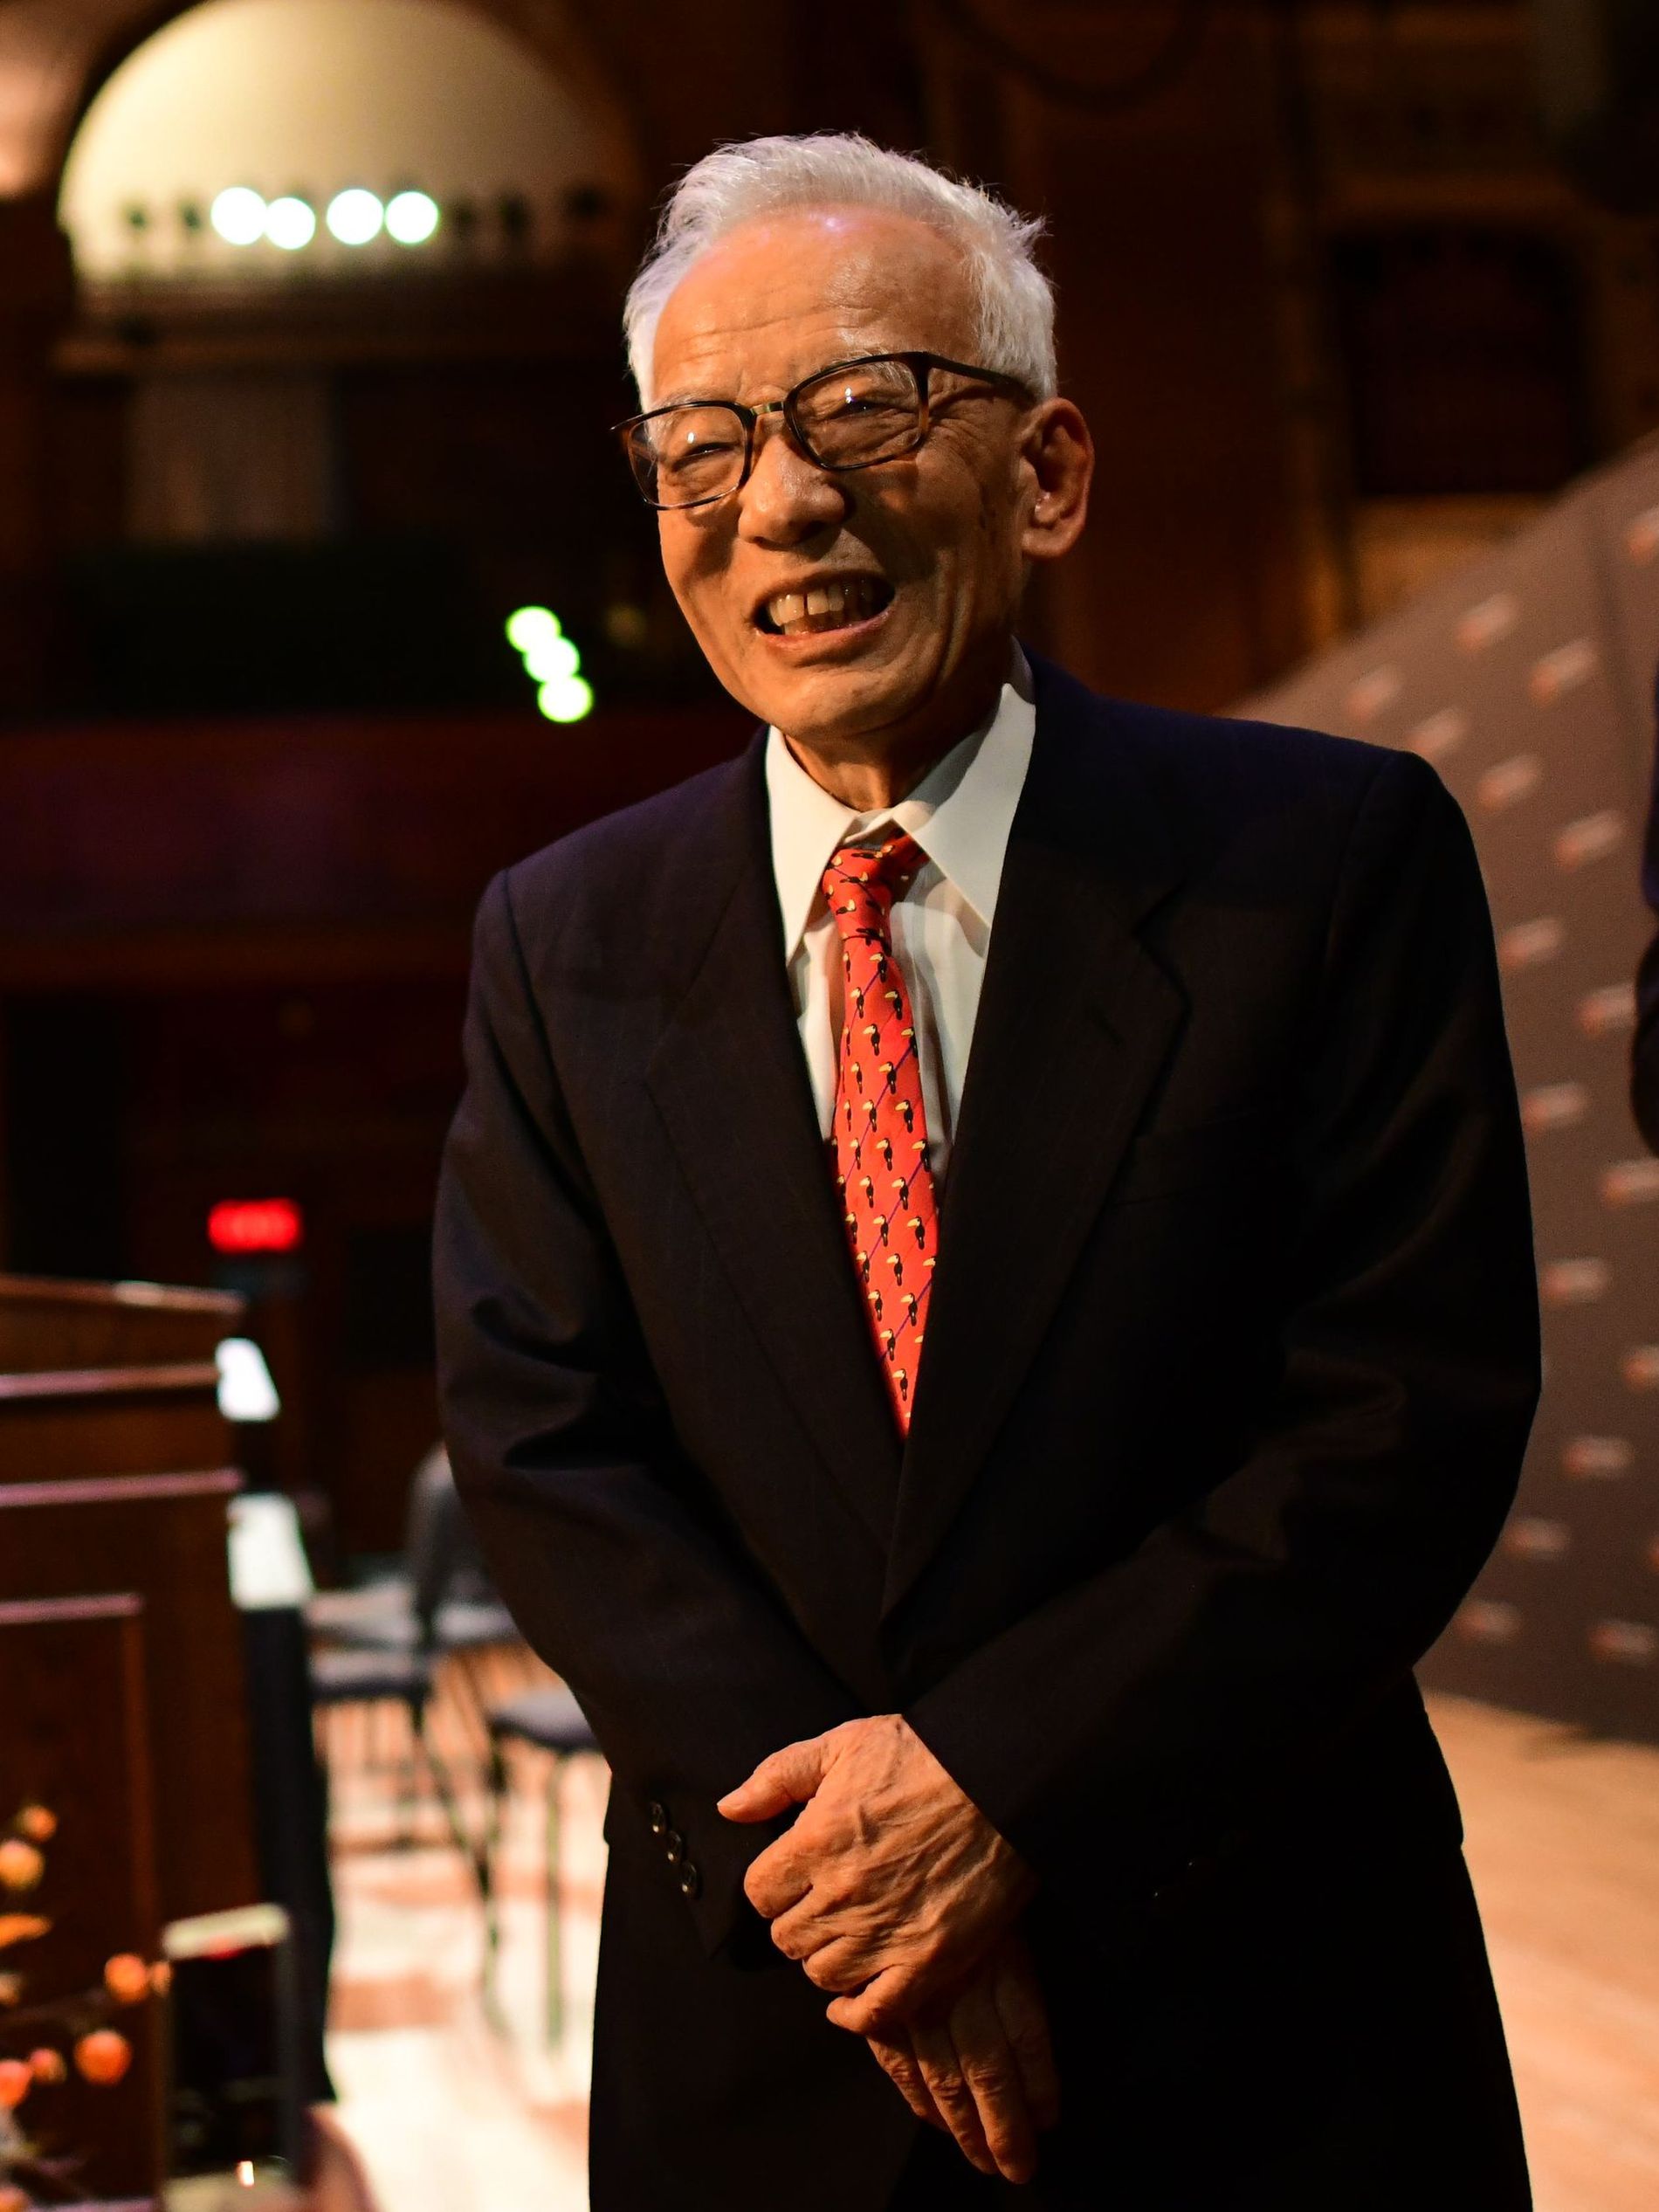 Syukuro Manabe of Princeton University